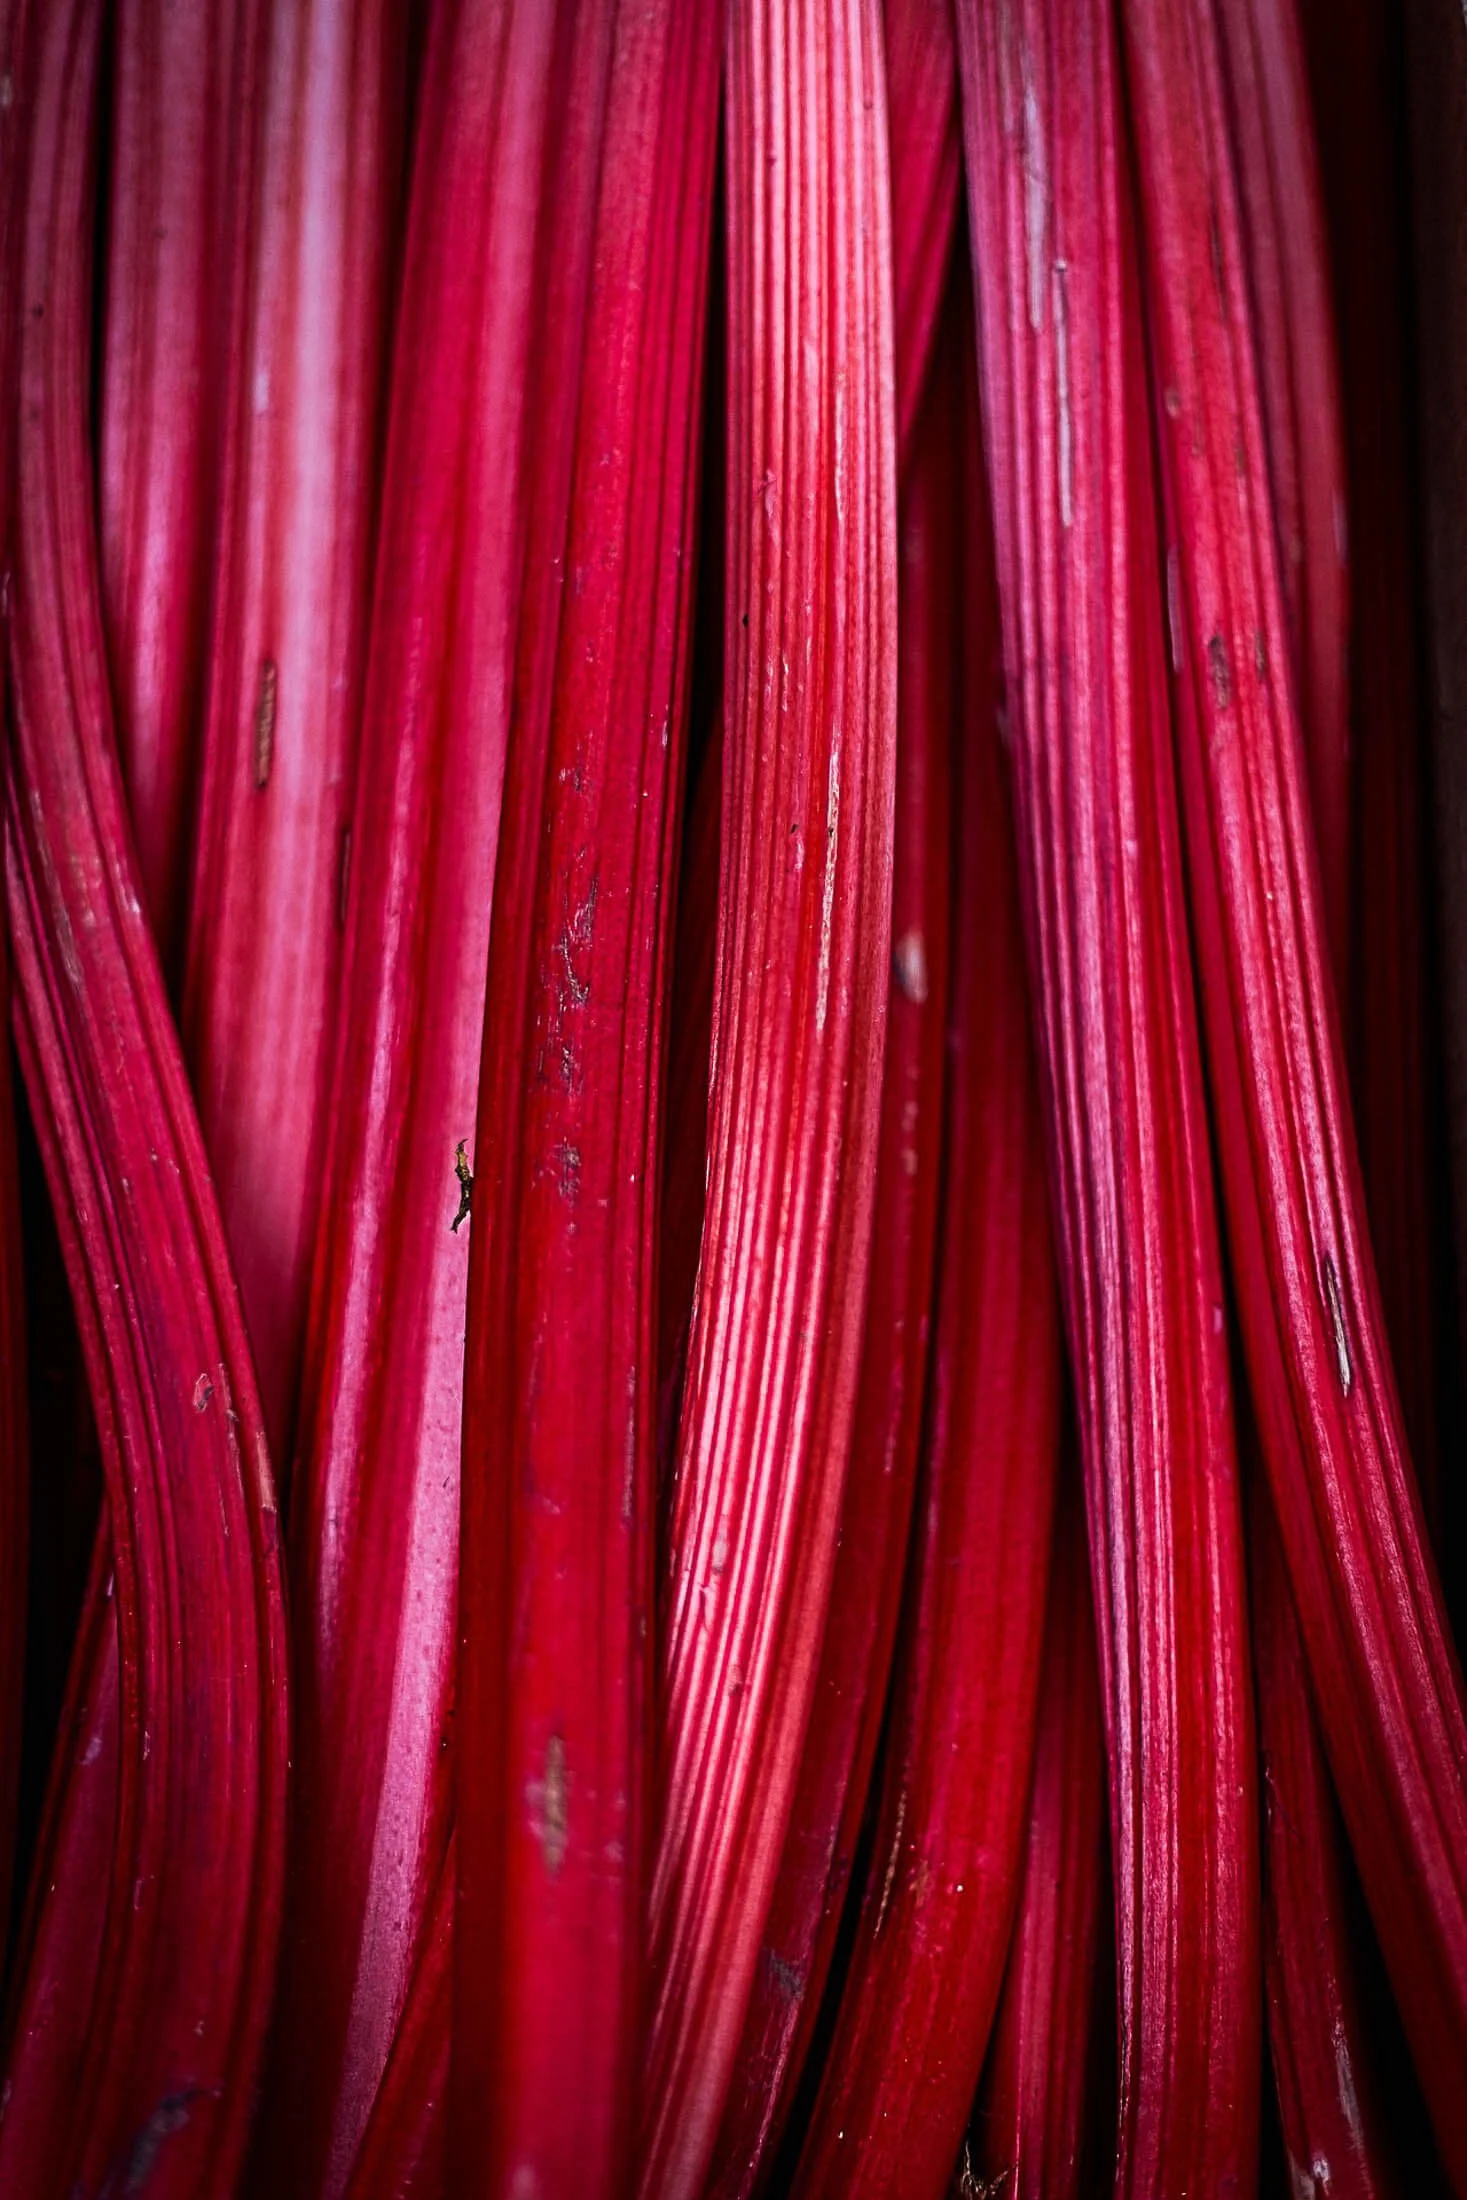 Ruby red rhubarb stalks.